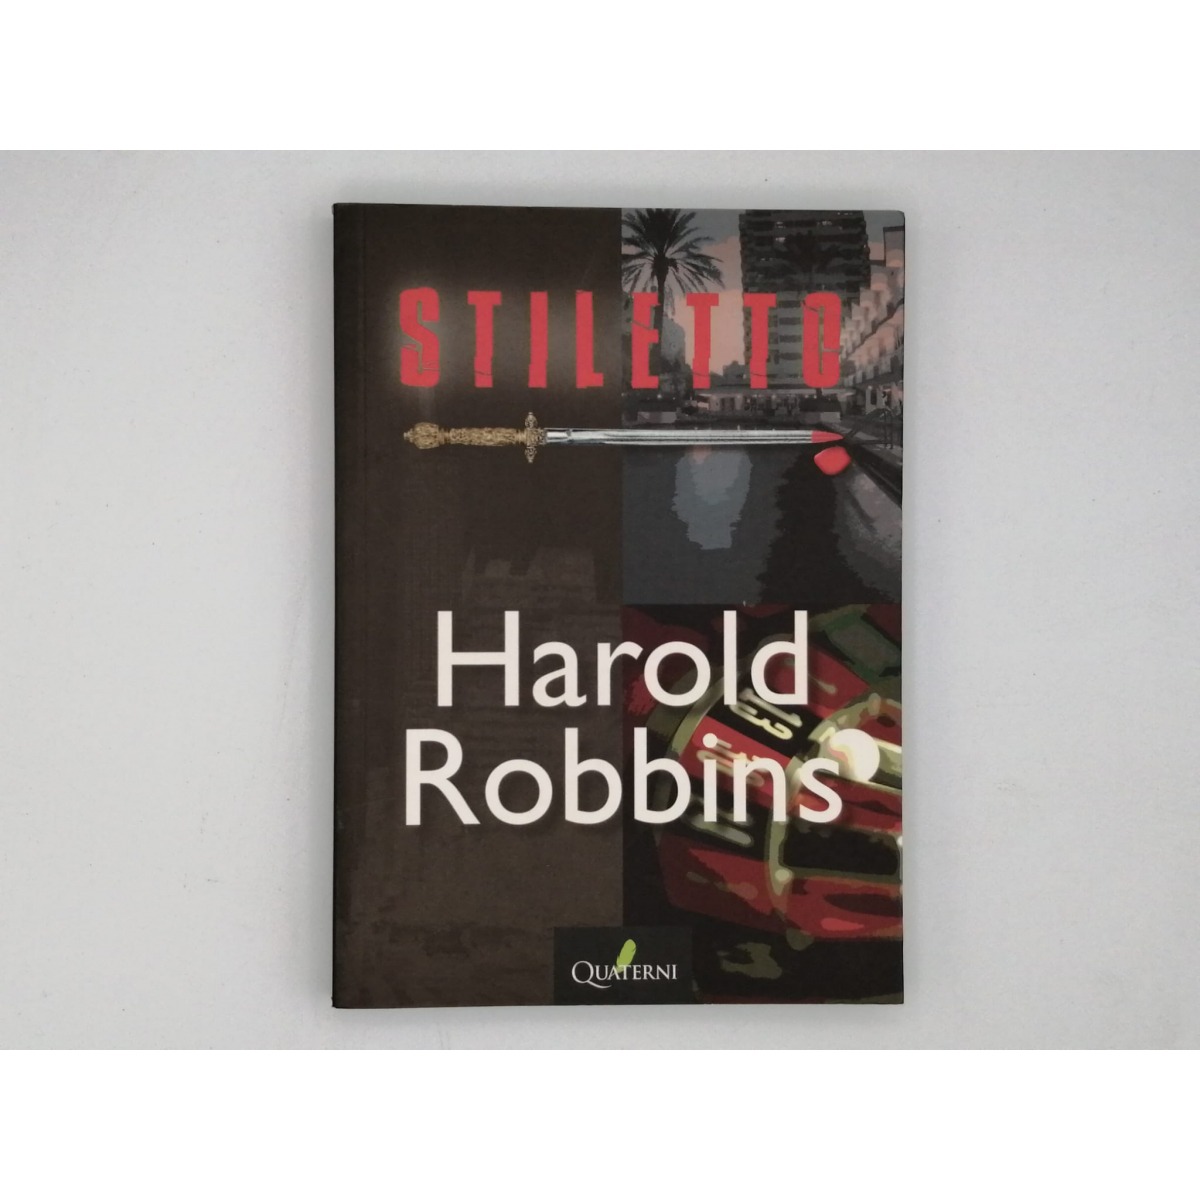 HAROLD ROBBINS. Stiletto